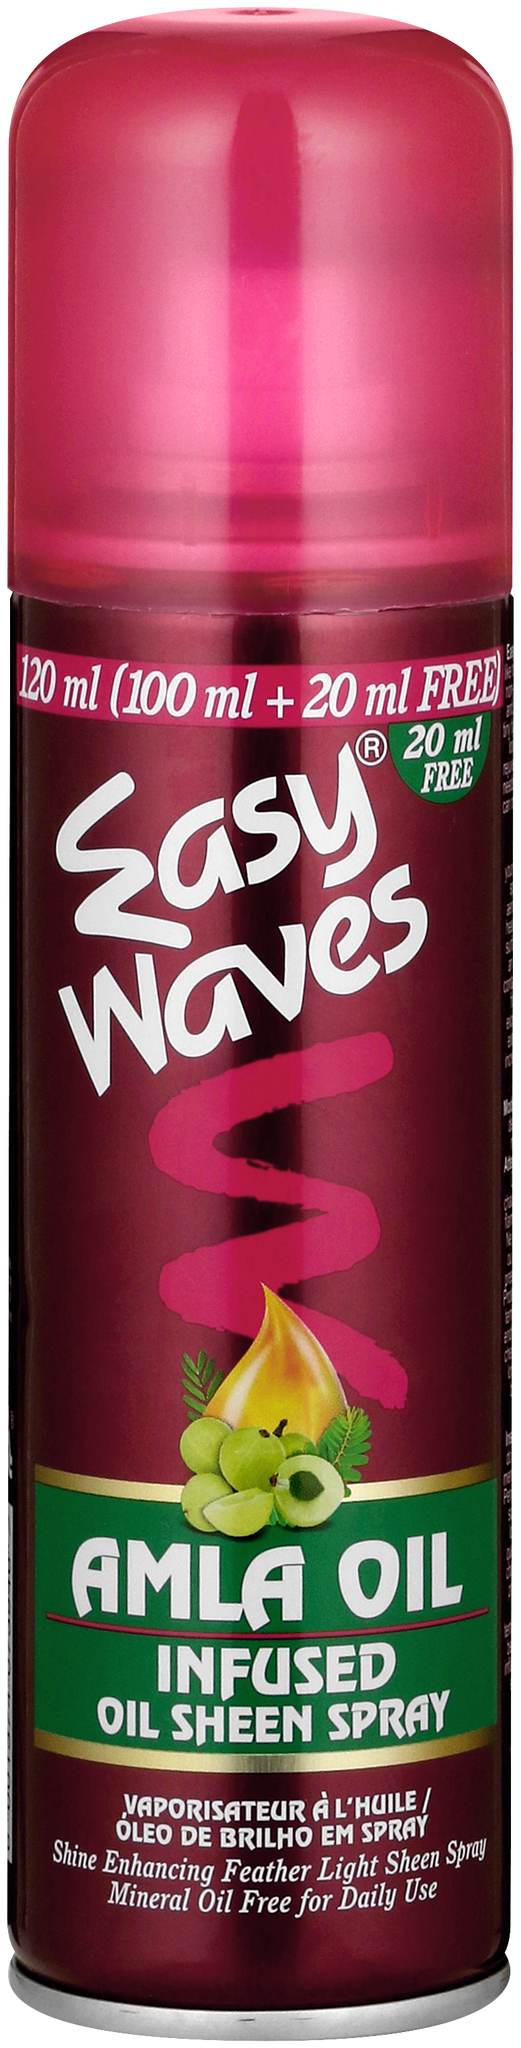 Easy Waves Amla oil sheen spray 120ml 36-Pack